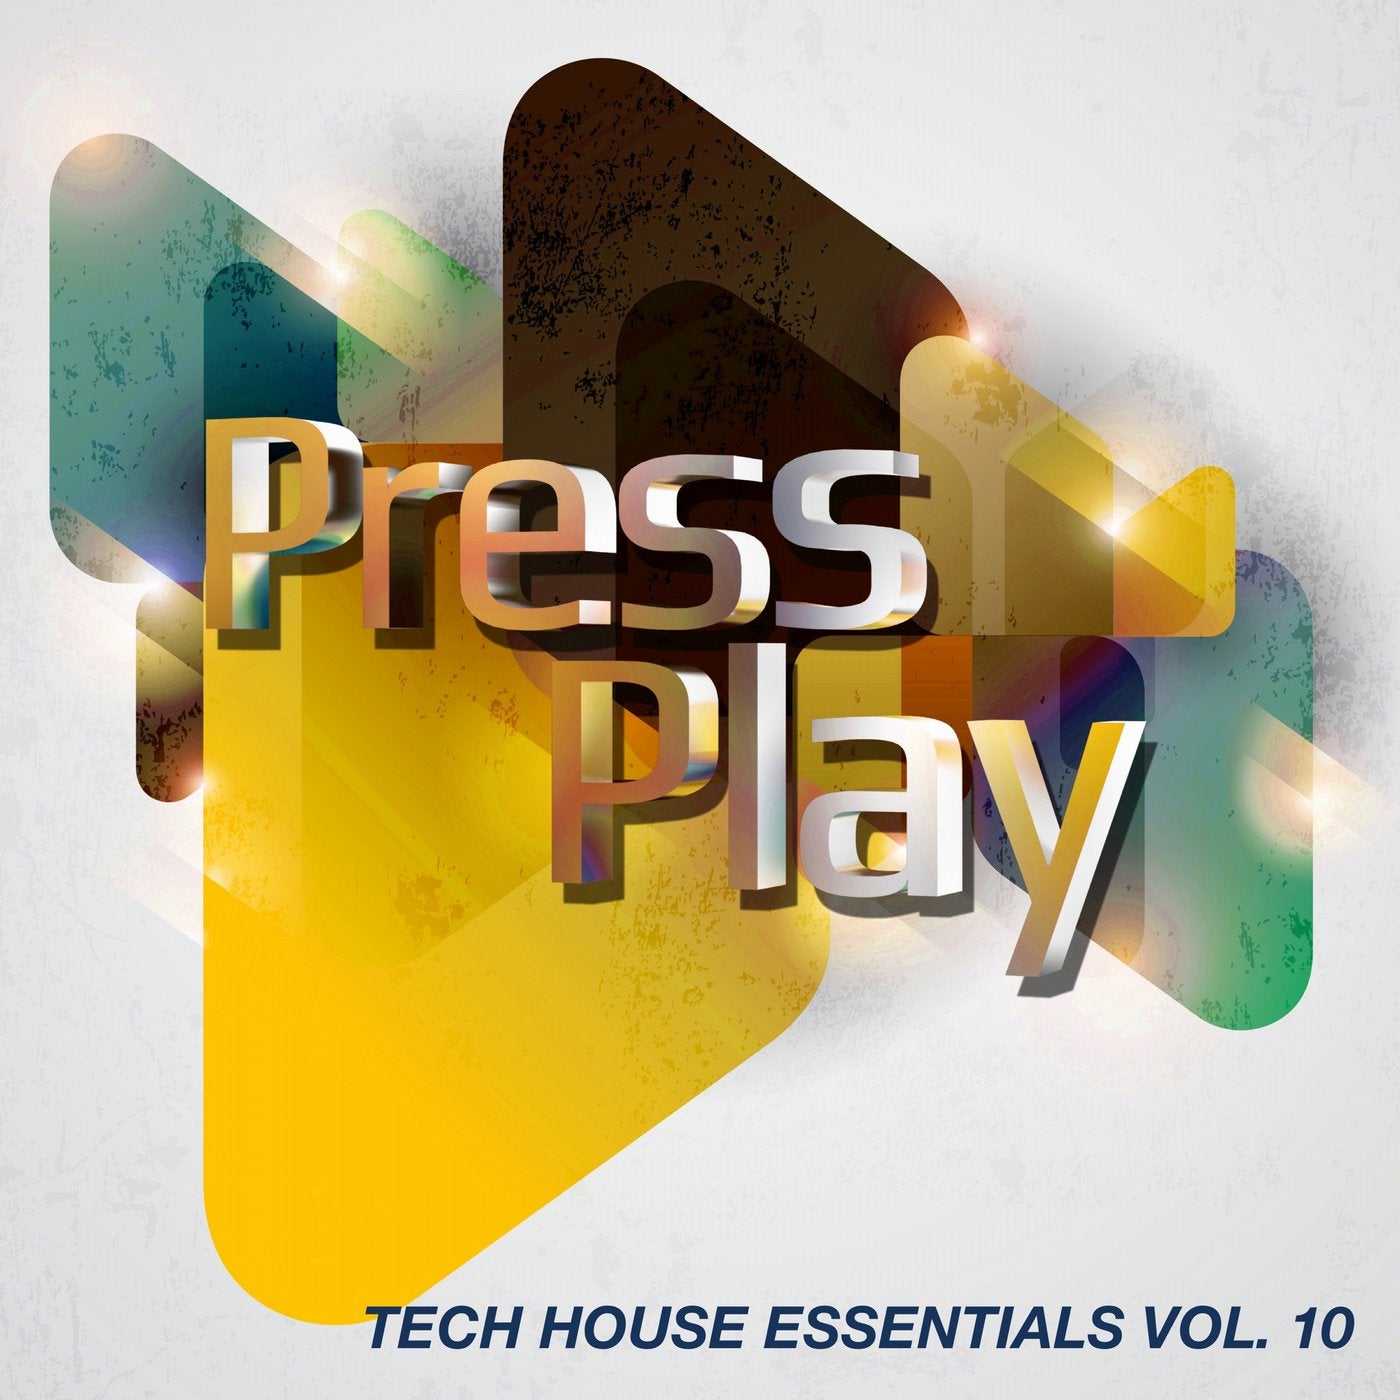 Tech House Essentials Vol. 10